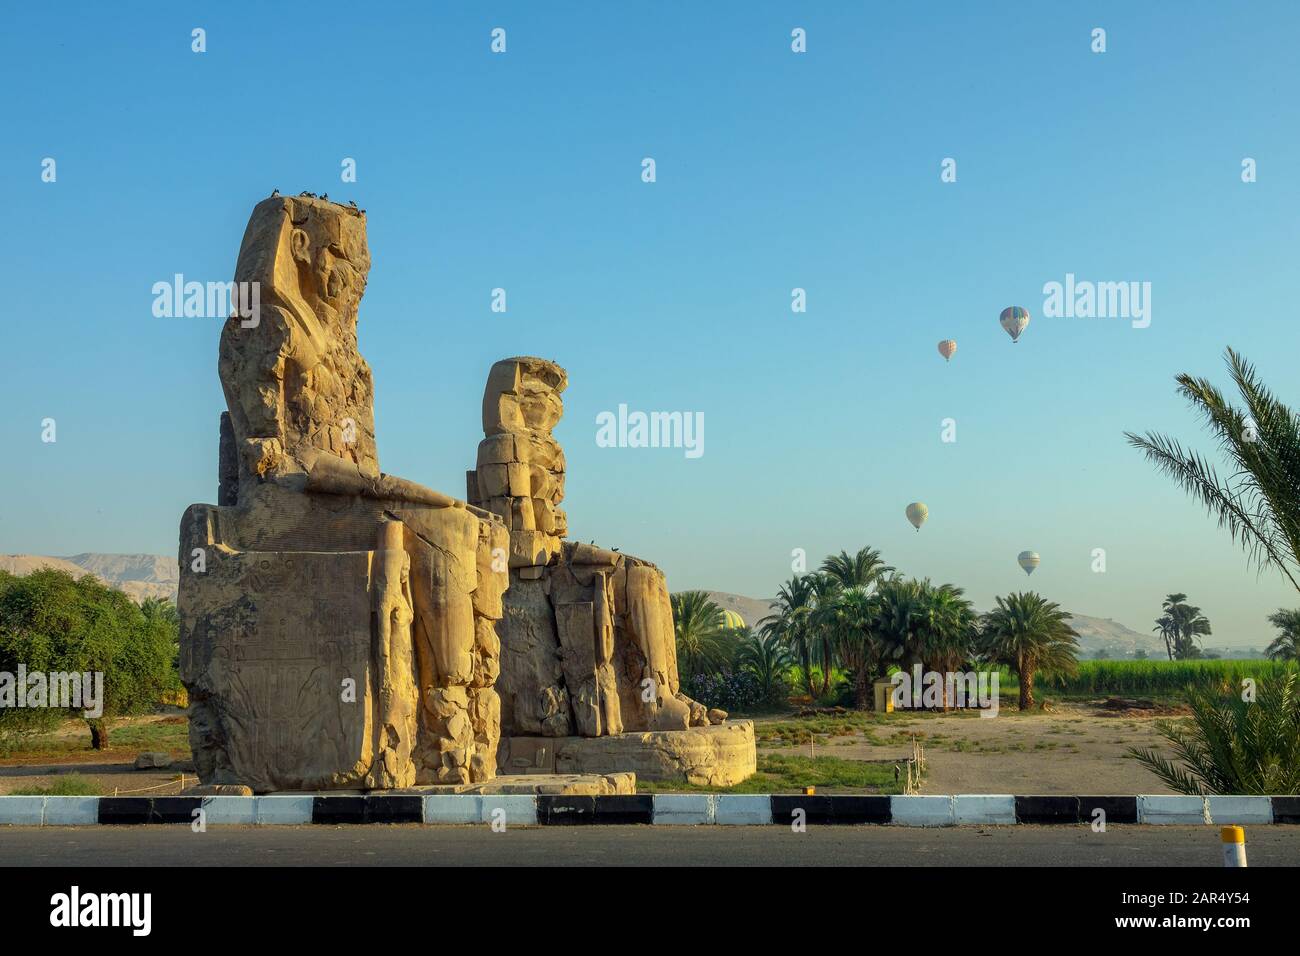 Kolossi von Memnon Statuen und Luftballons Stockfoto